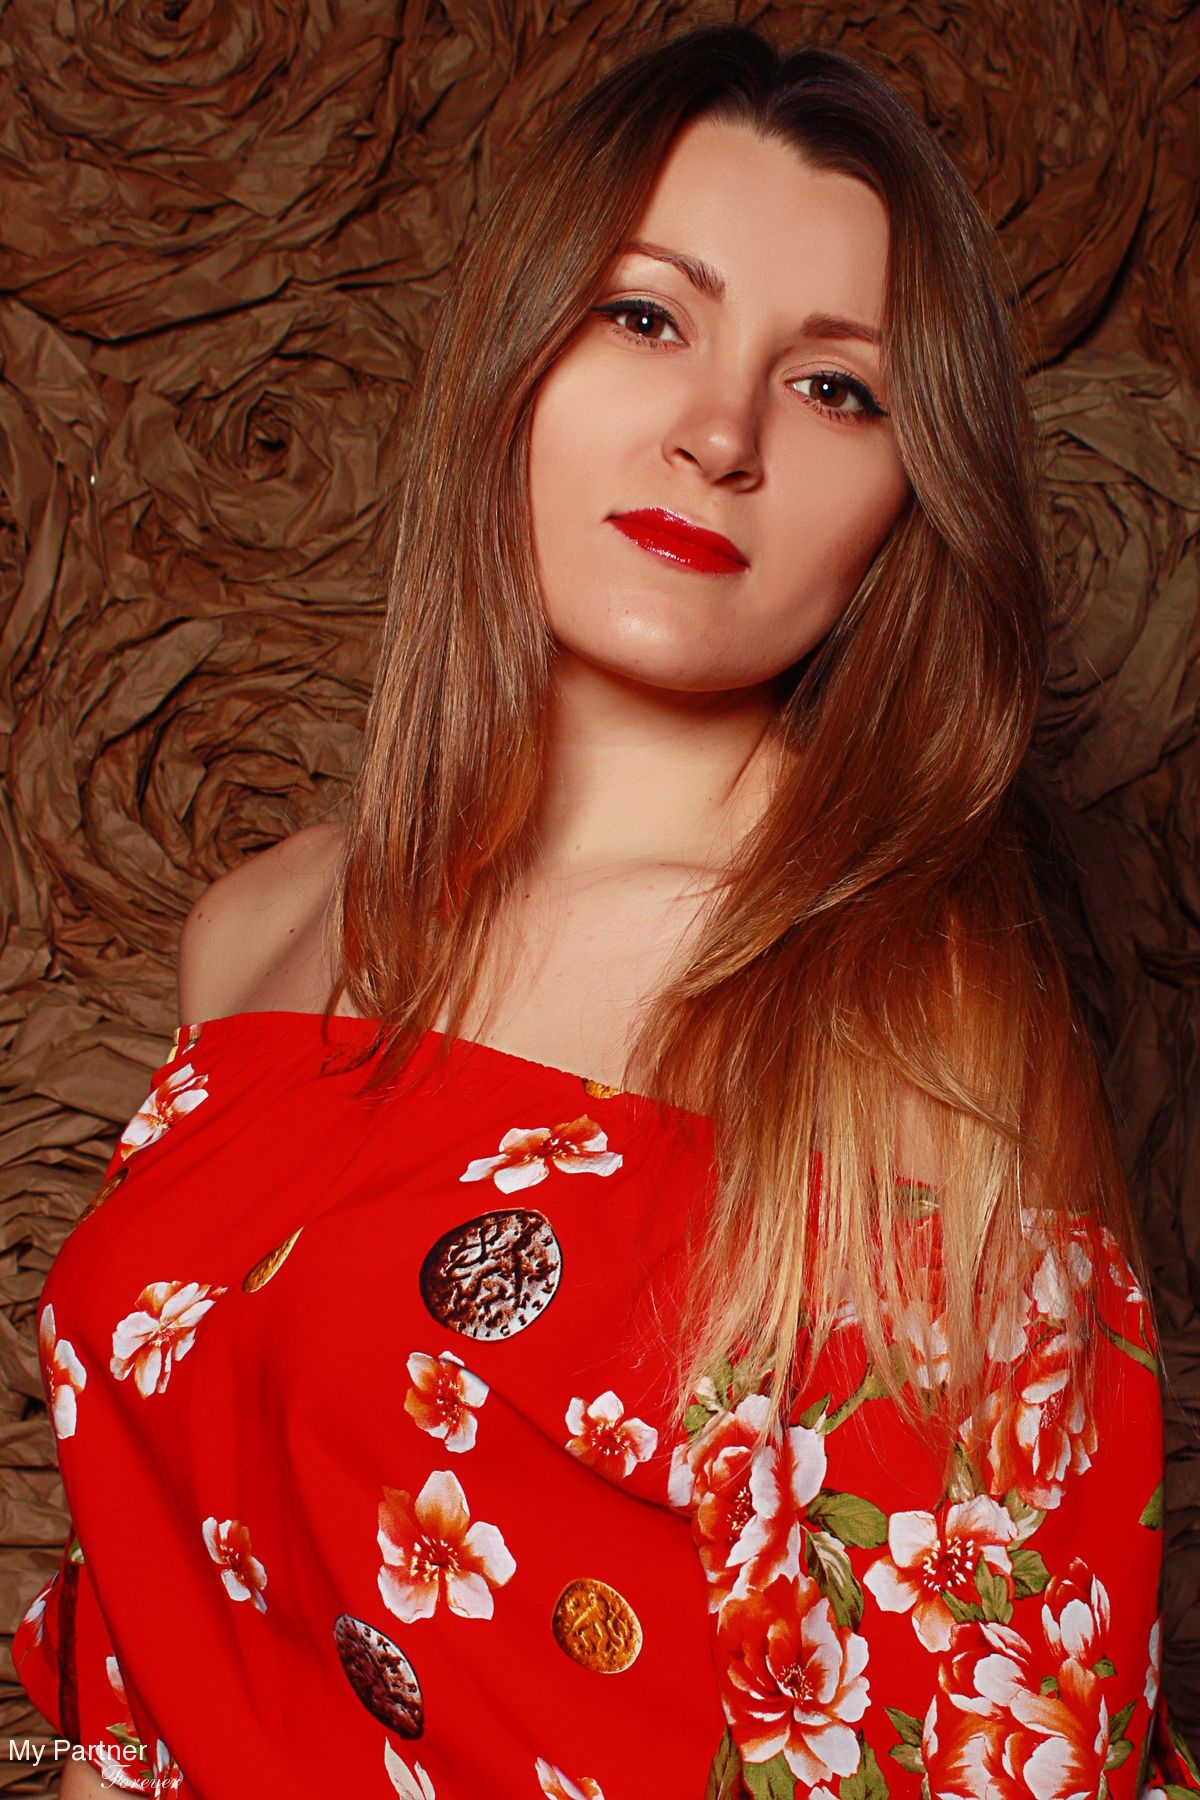 Dating Site to Meet Olga from Kiev, Ukraine